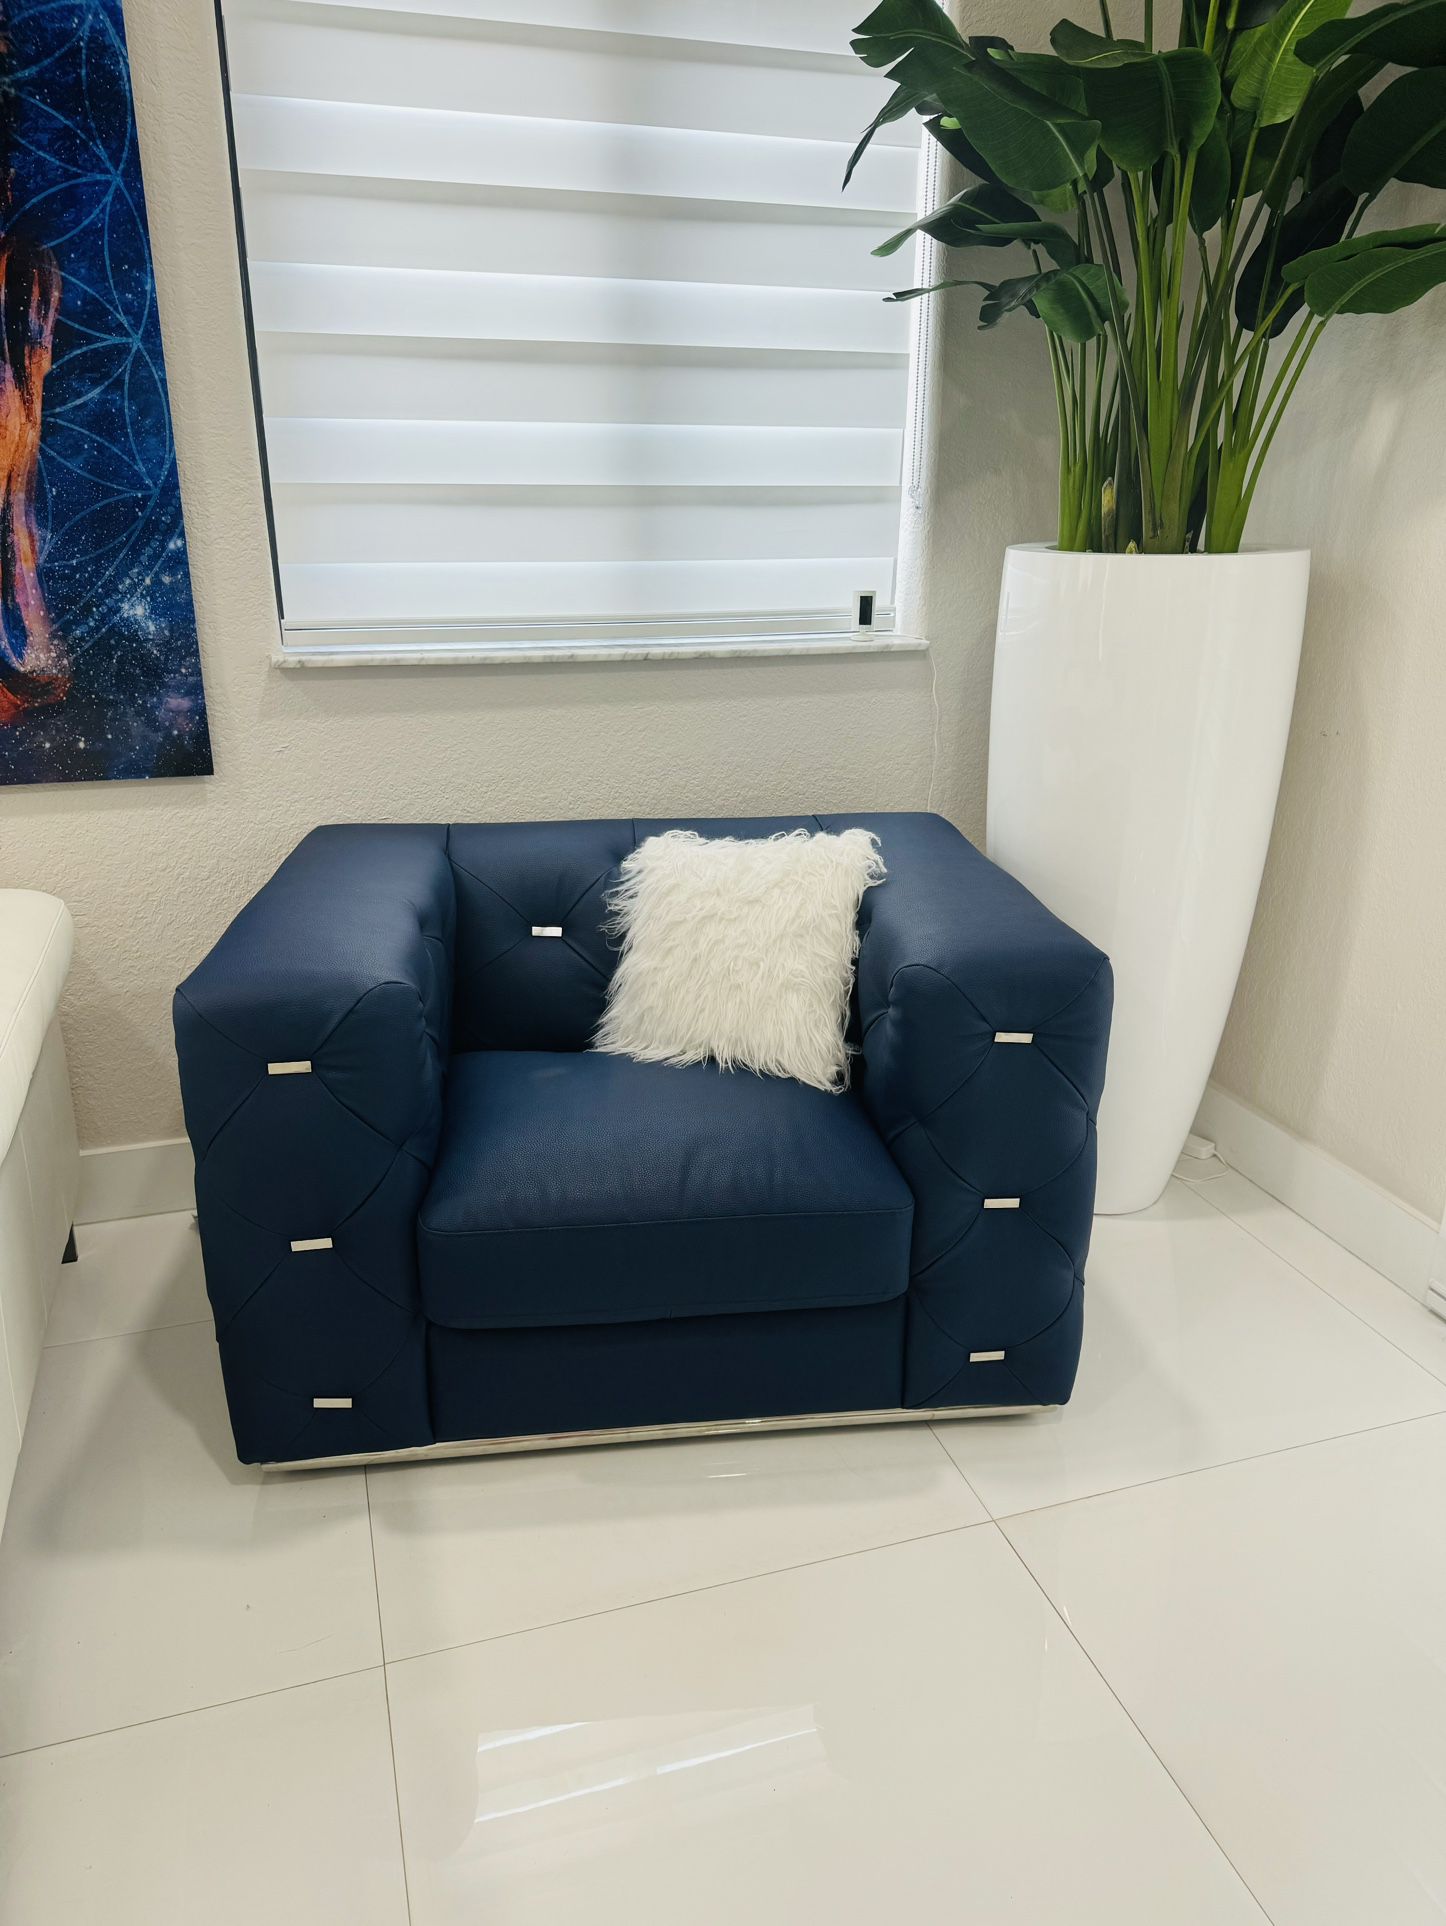 Wide dark blue mordern chair from el Dorado furniture